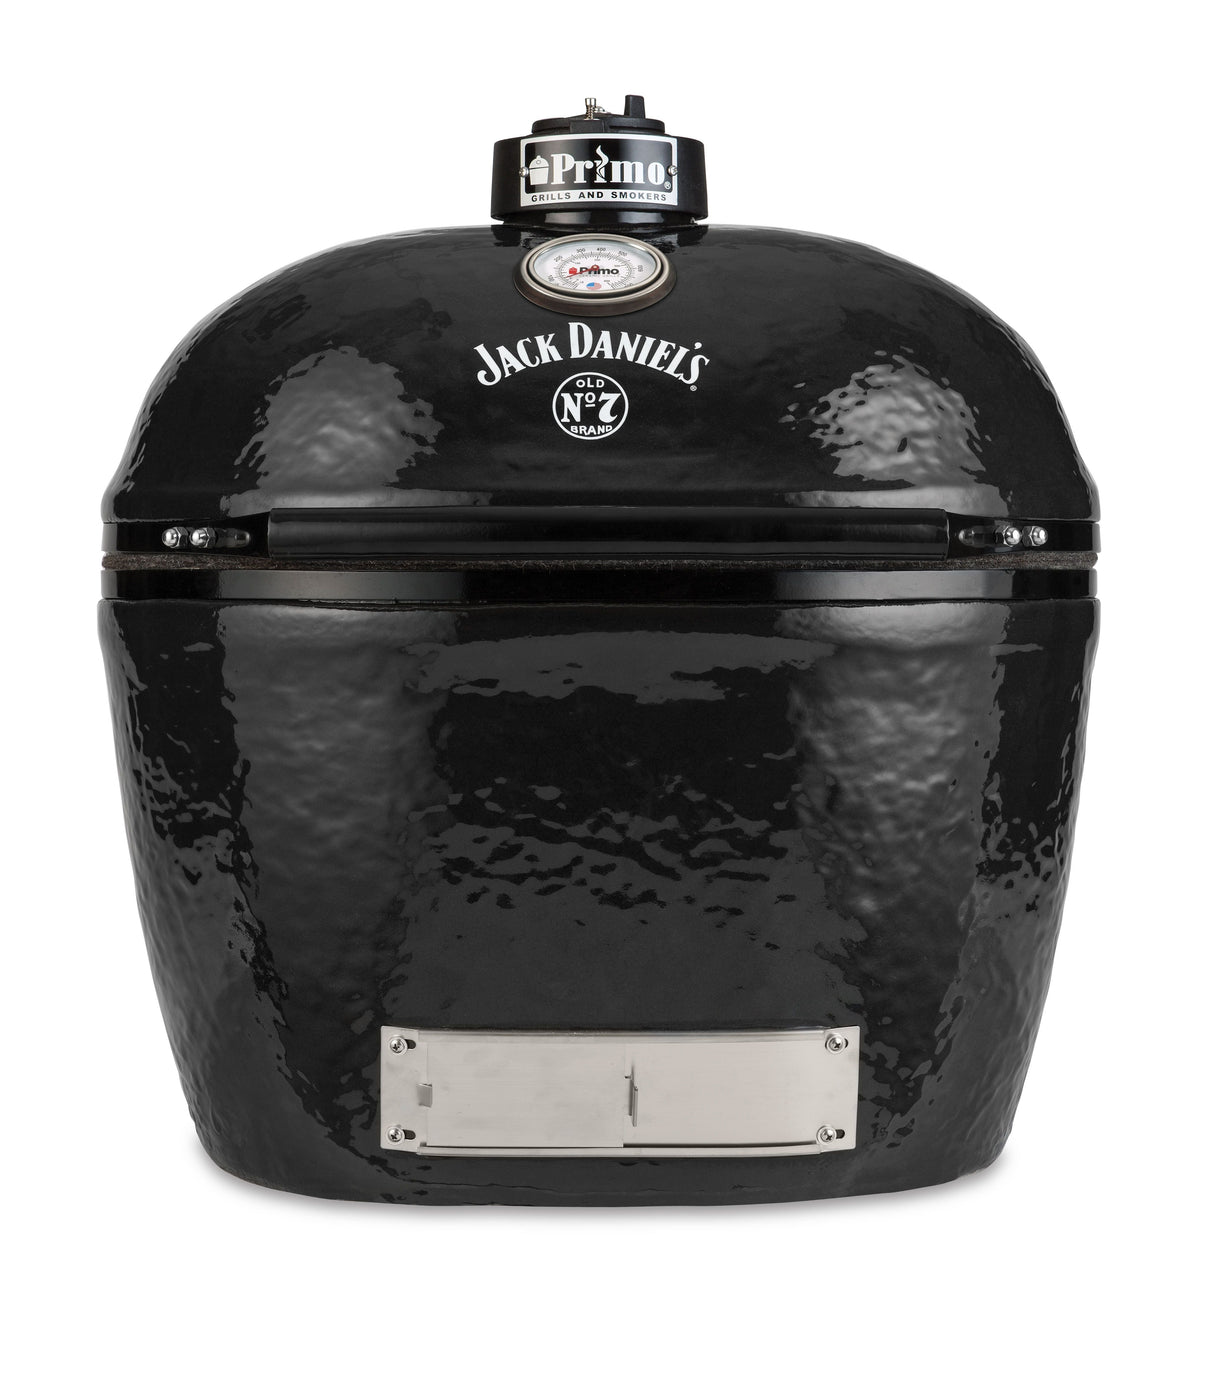 Primo Jack Daniels Edition Oval XL 400 Kamado Charcoal Grill PGCXLHJ